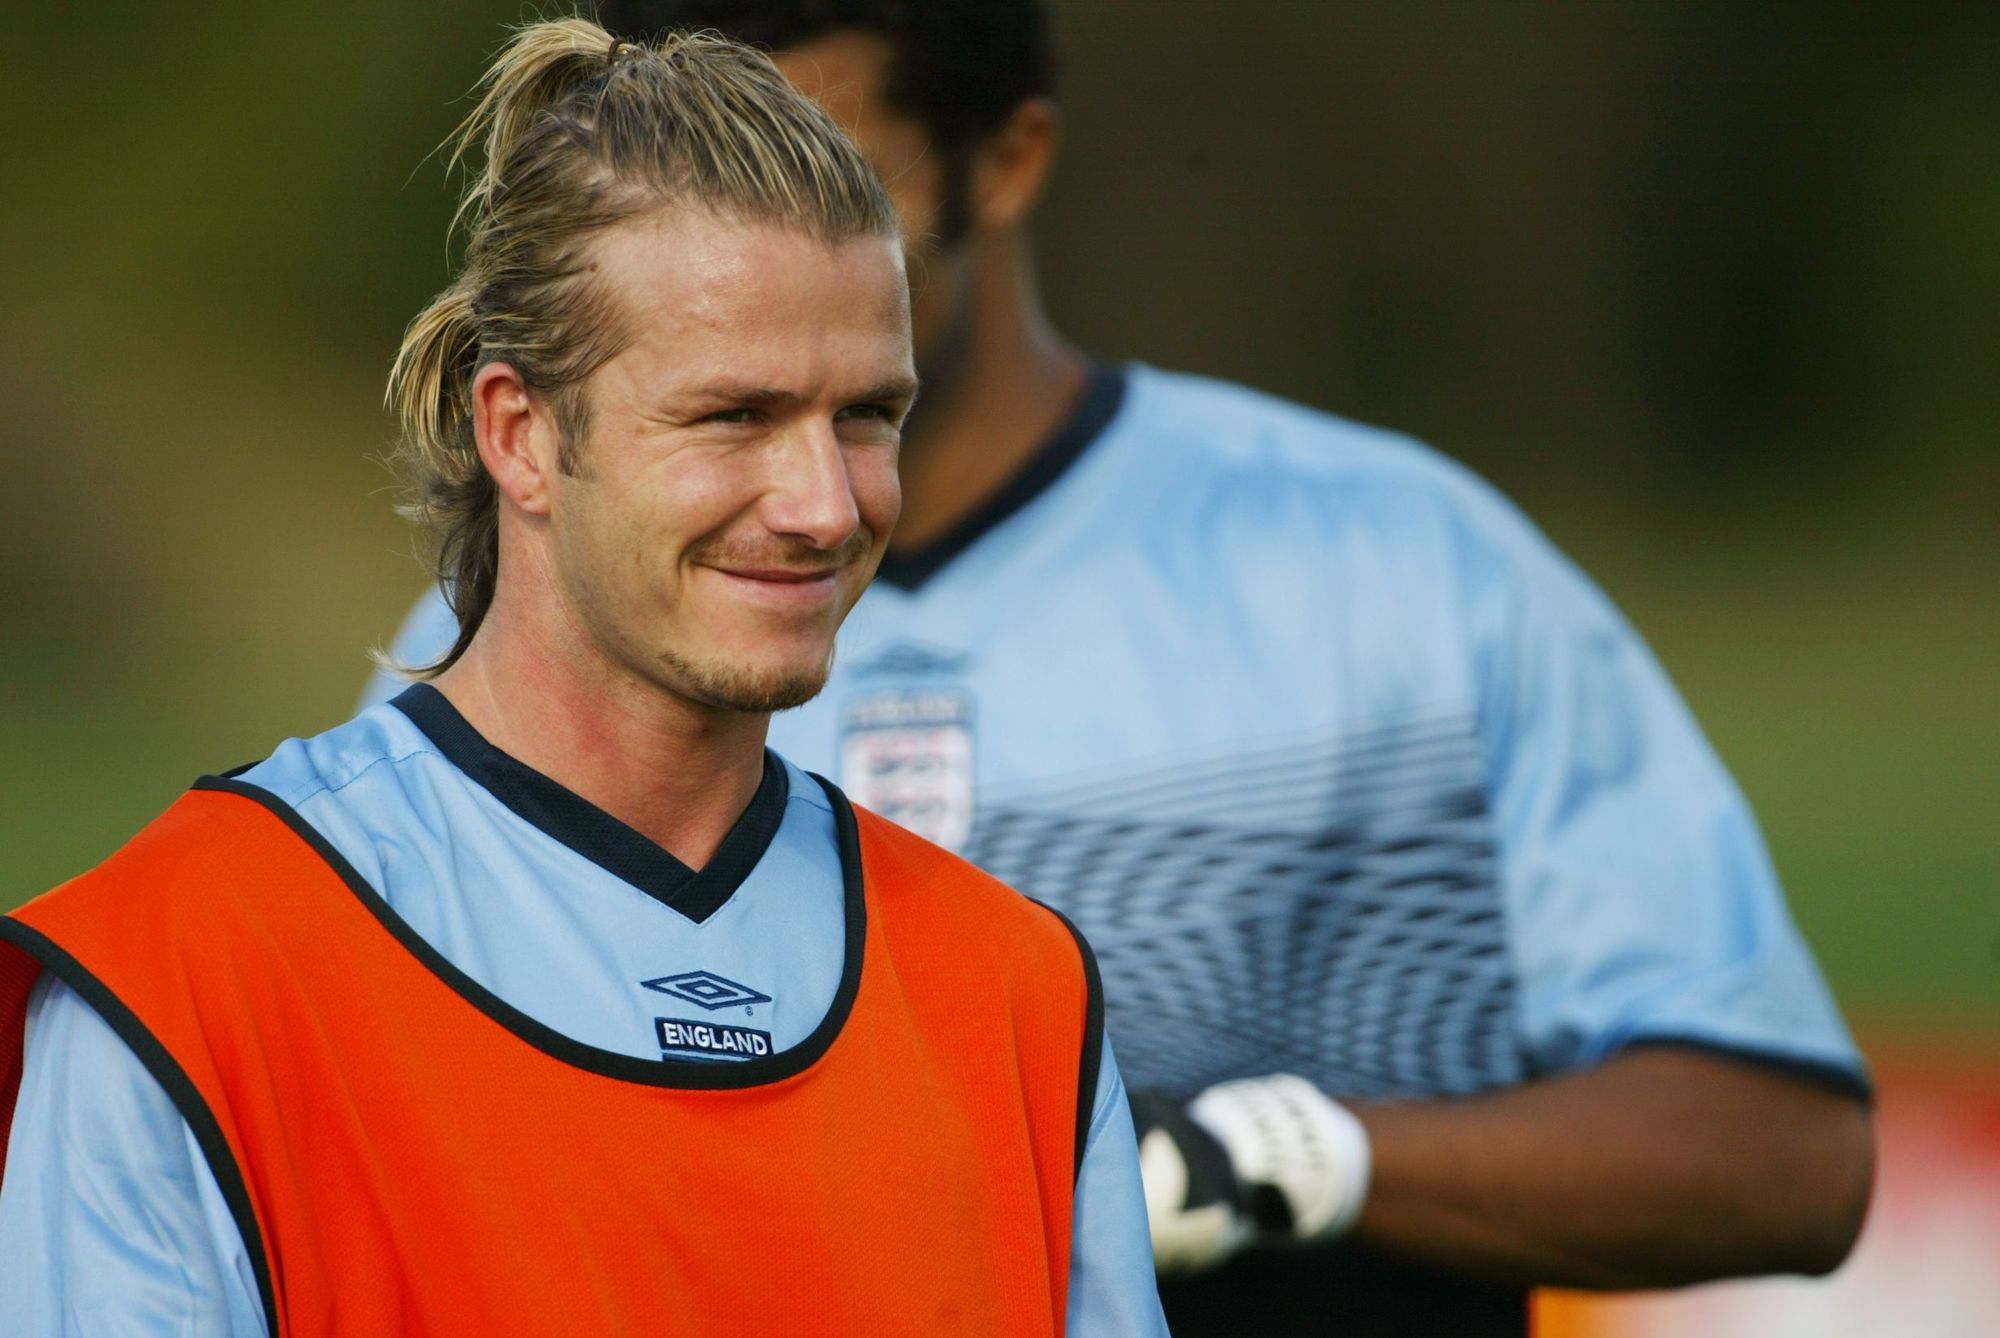 David Beckham en un entrentamiento de fútbol con cabello rubio recogido hacia atrás